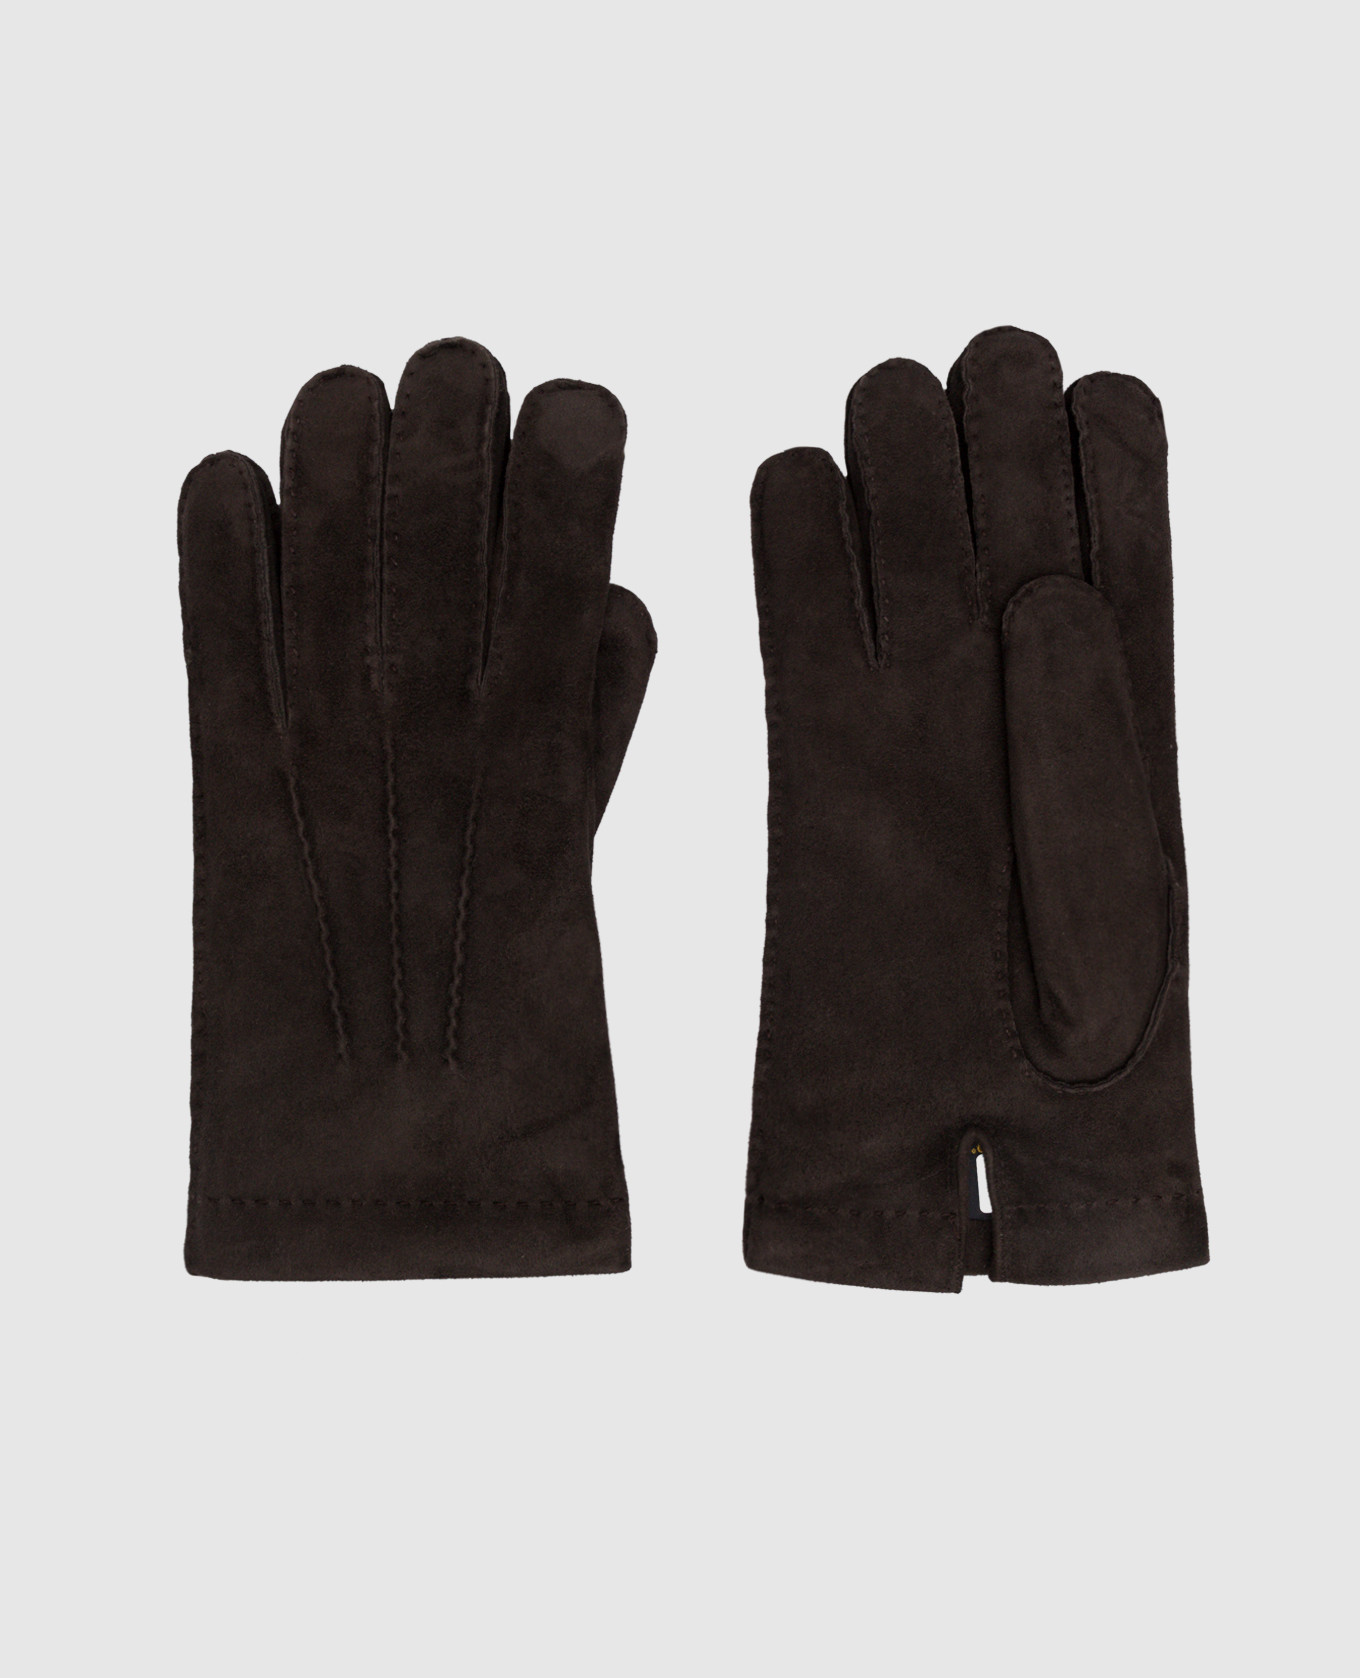 Narton brown suede gloves